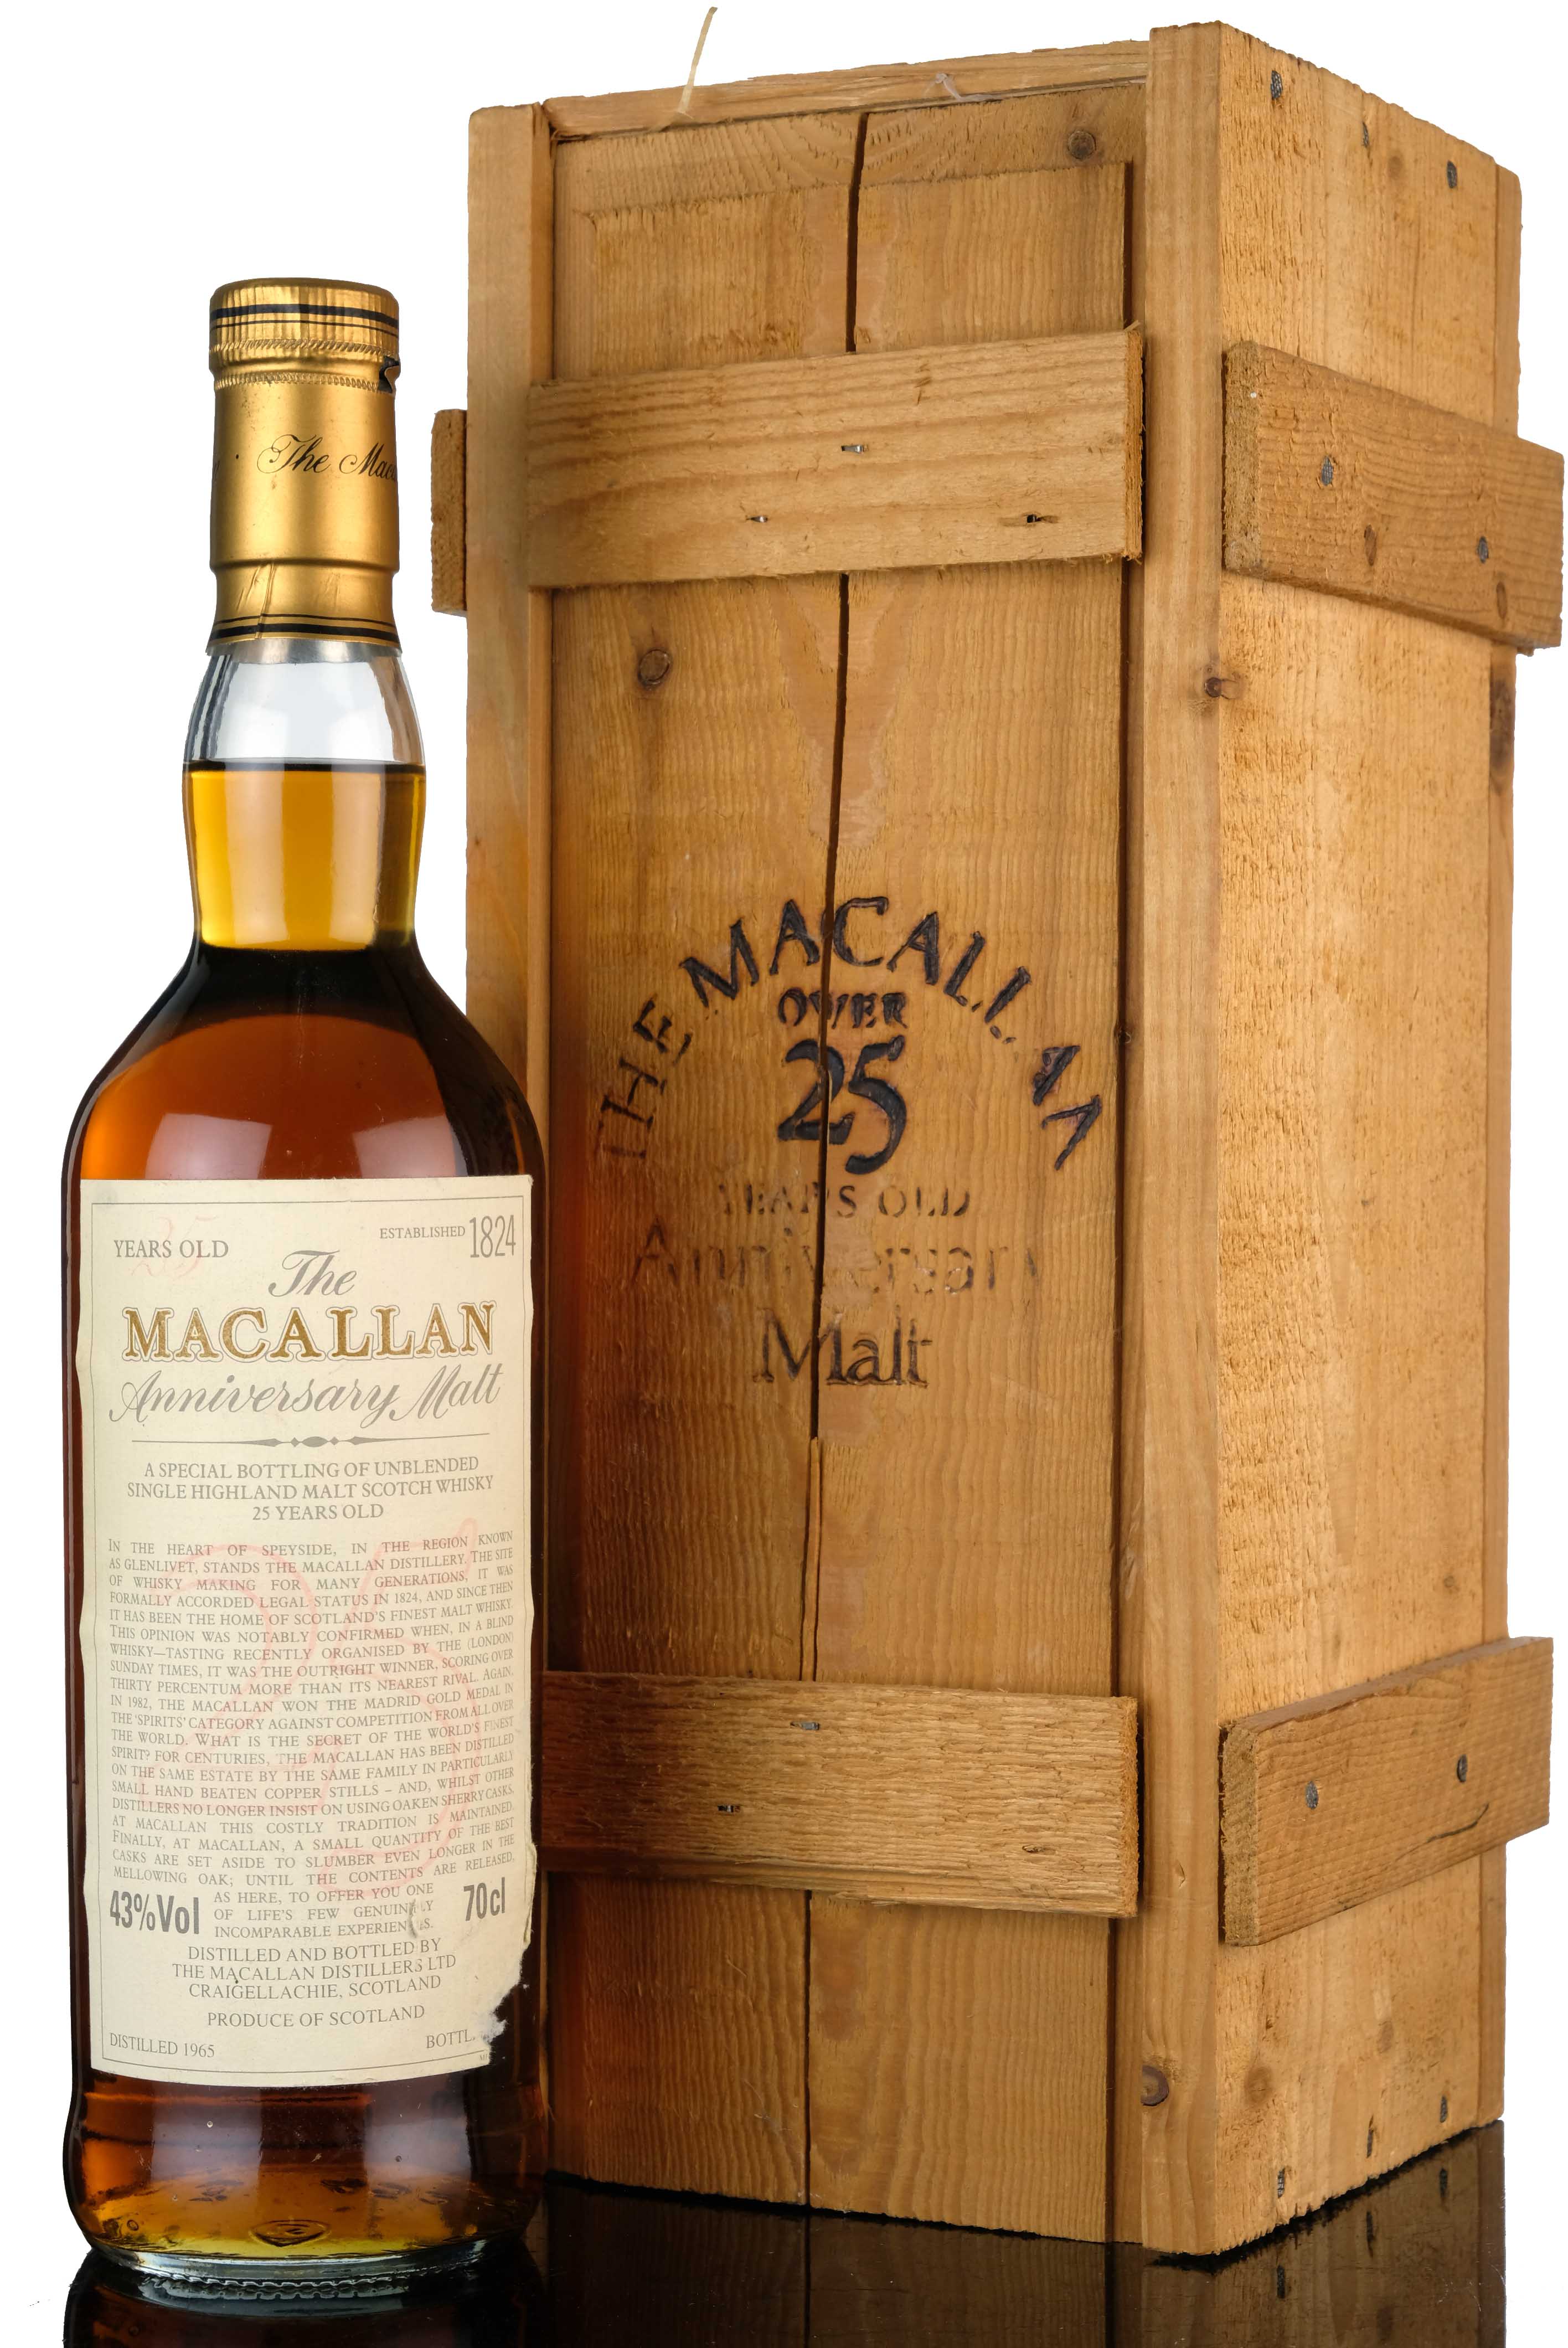 Macallan 1965 - 25 Year Old - Anniversary Malt